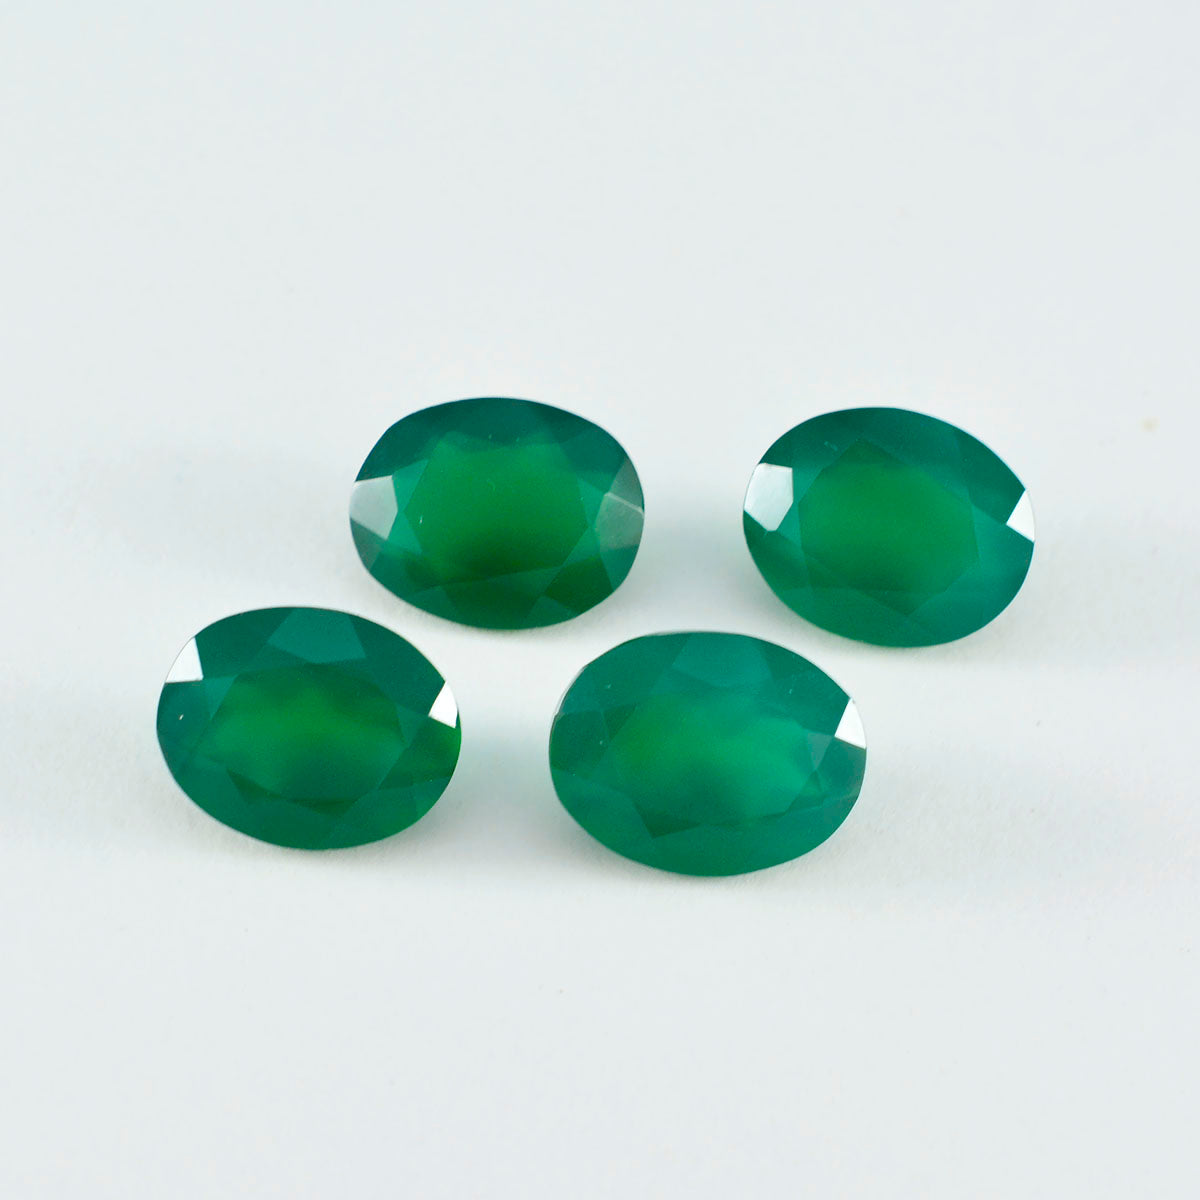 Riyogems 1PC echte groene onyx gefacetteerd 7x9 mm ovale vorm knappe kwaliteit edelsteen